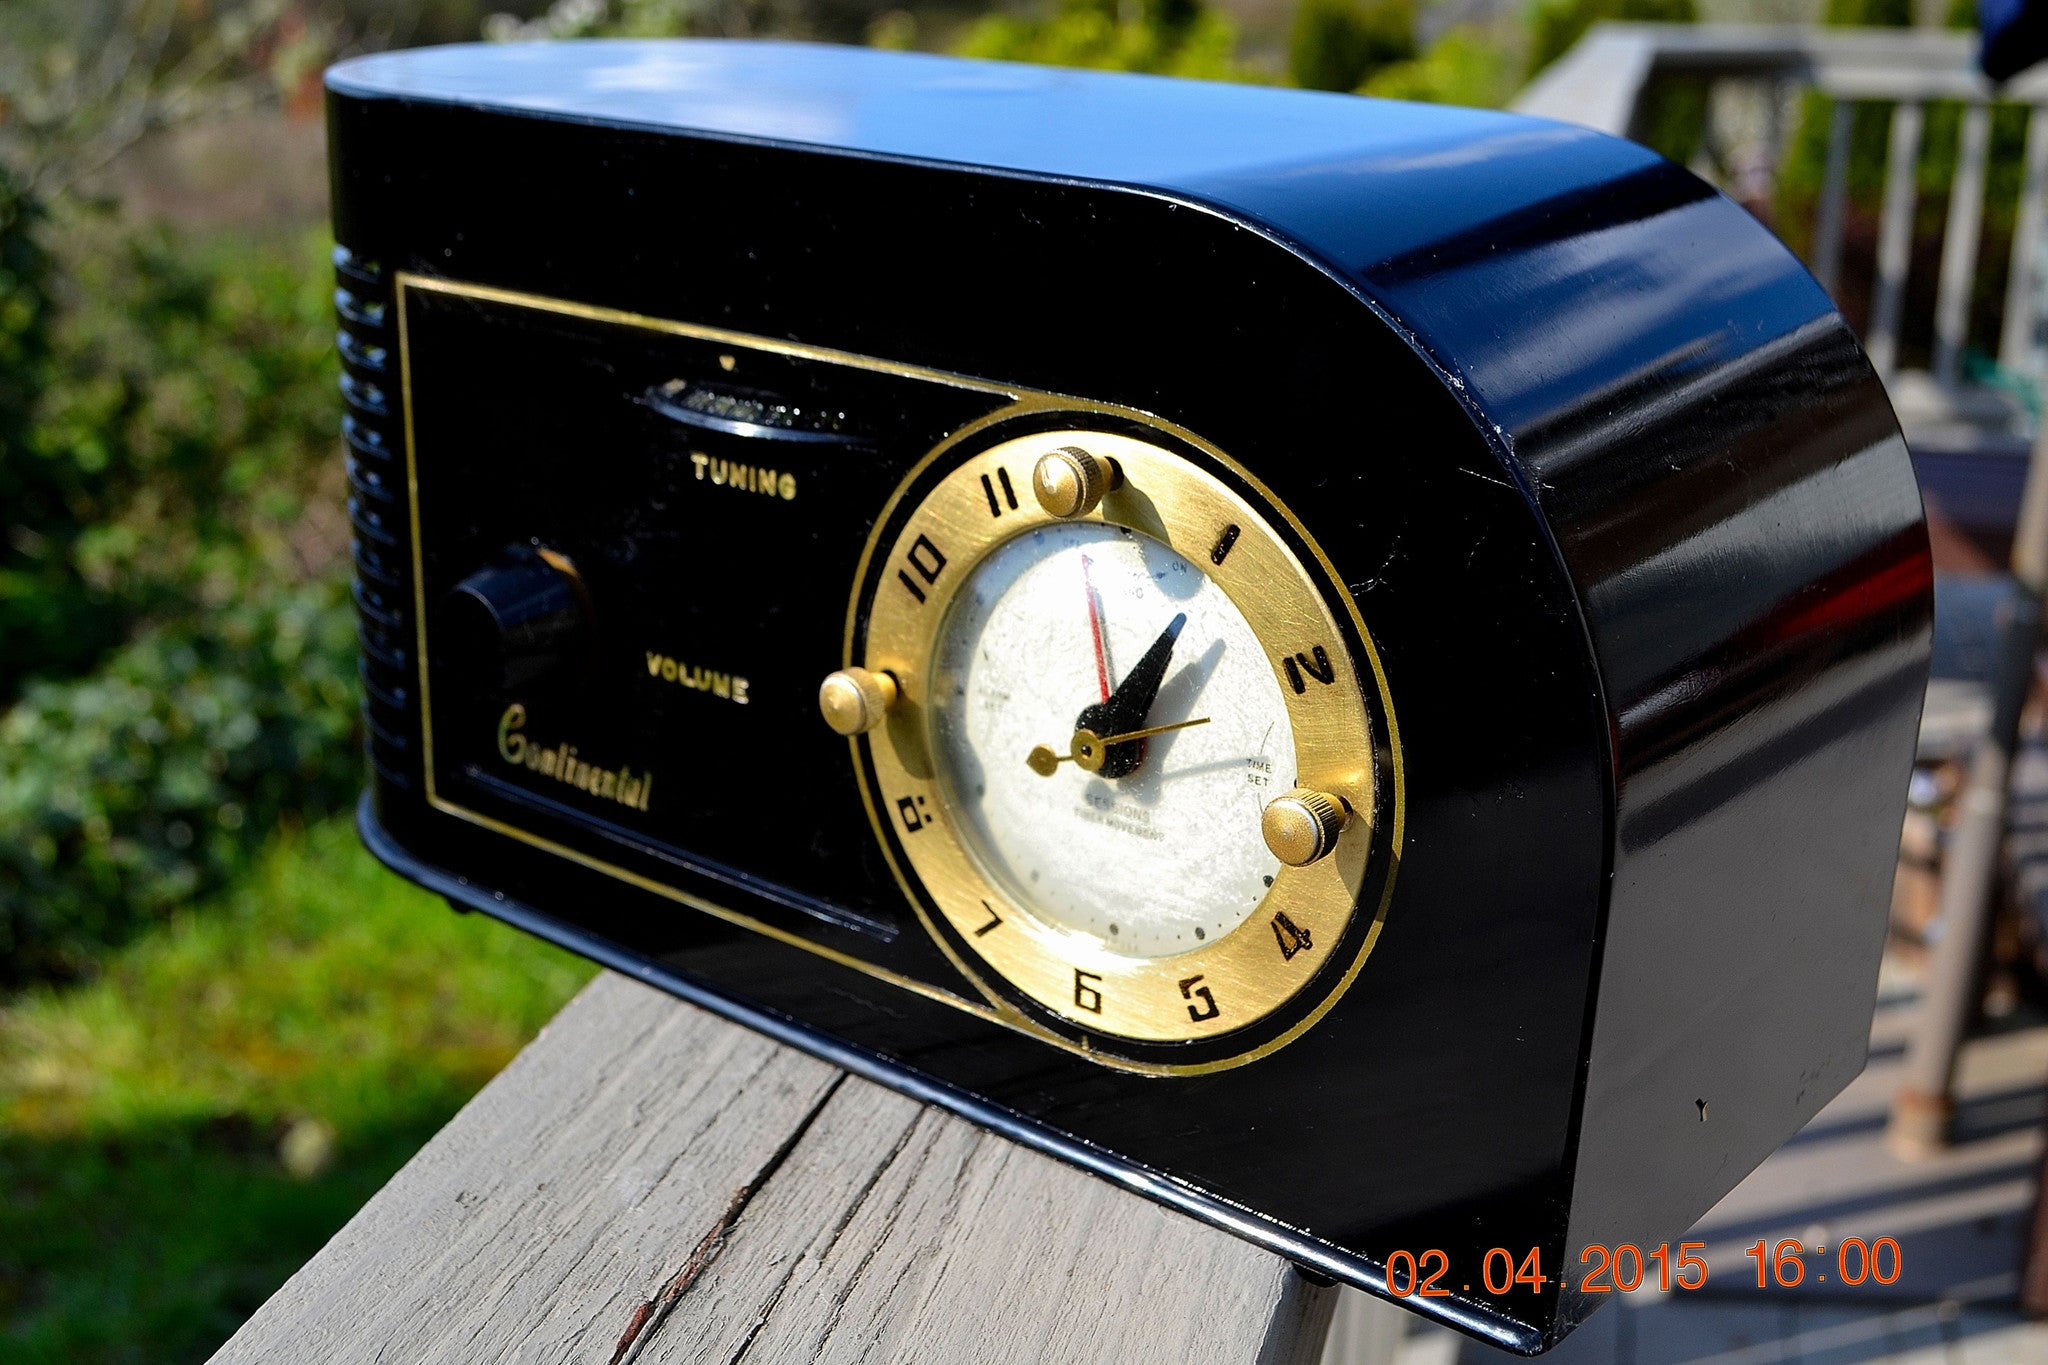 SOLD! - June 4, 2015 - CASABLANCA Black Golden Age Art Deco 1948 Continental Model 1600 AM Tube Clock Radio Totally Restored! - [product_type} - Continental - Retro Radio Farm